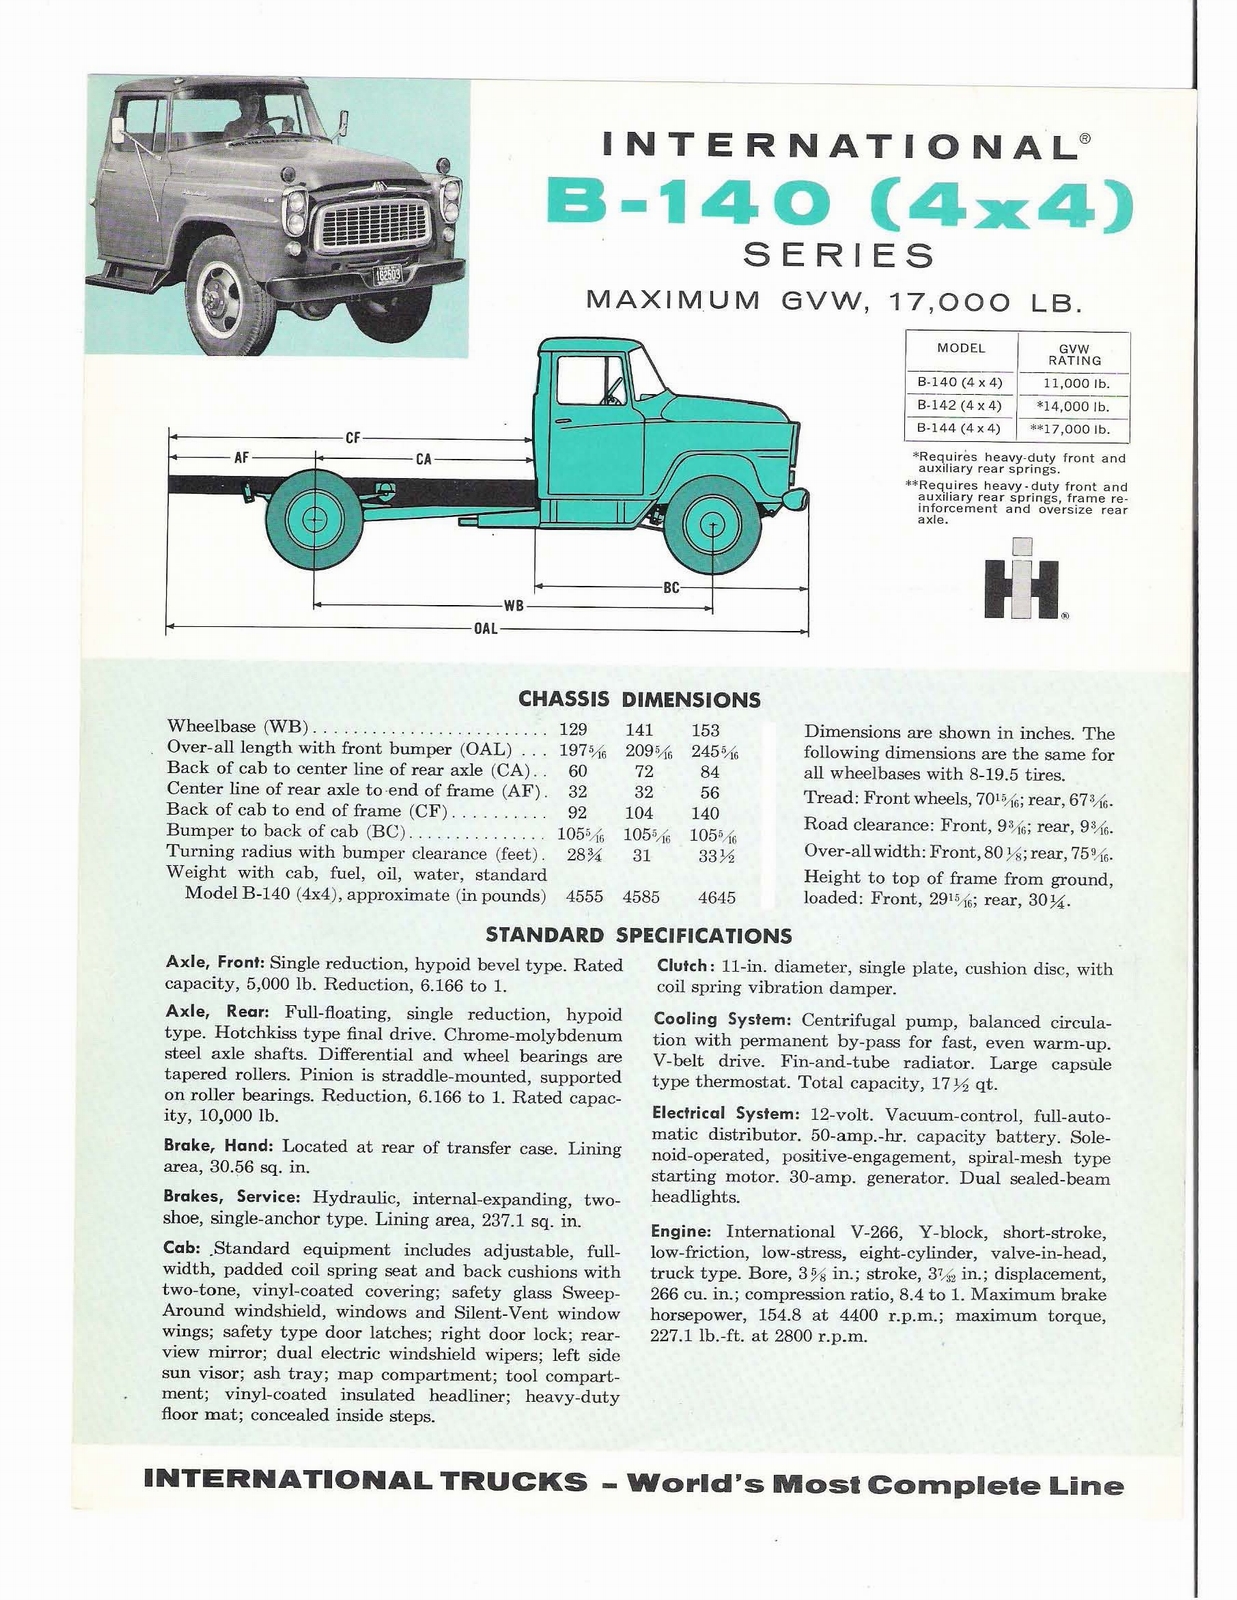 n_1959 International B-140 4x4 Series-01.jpg